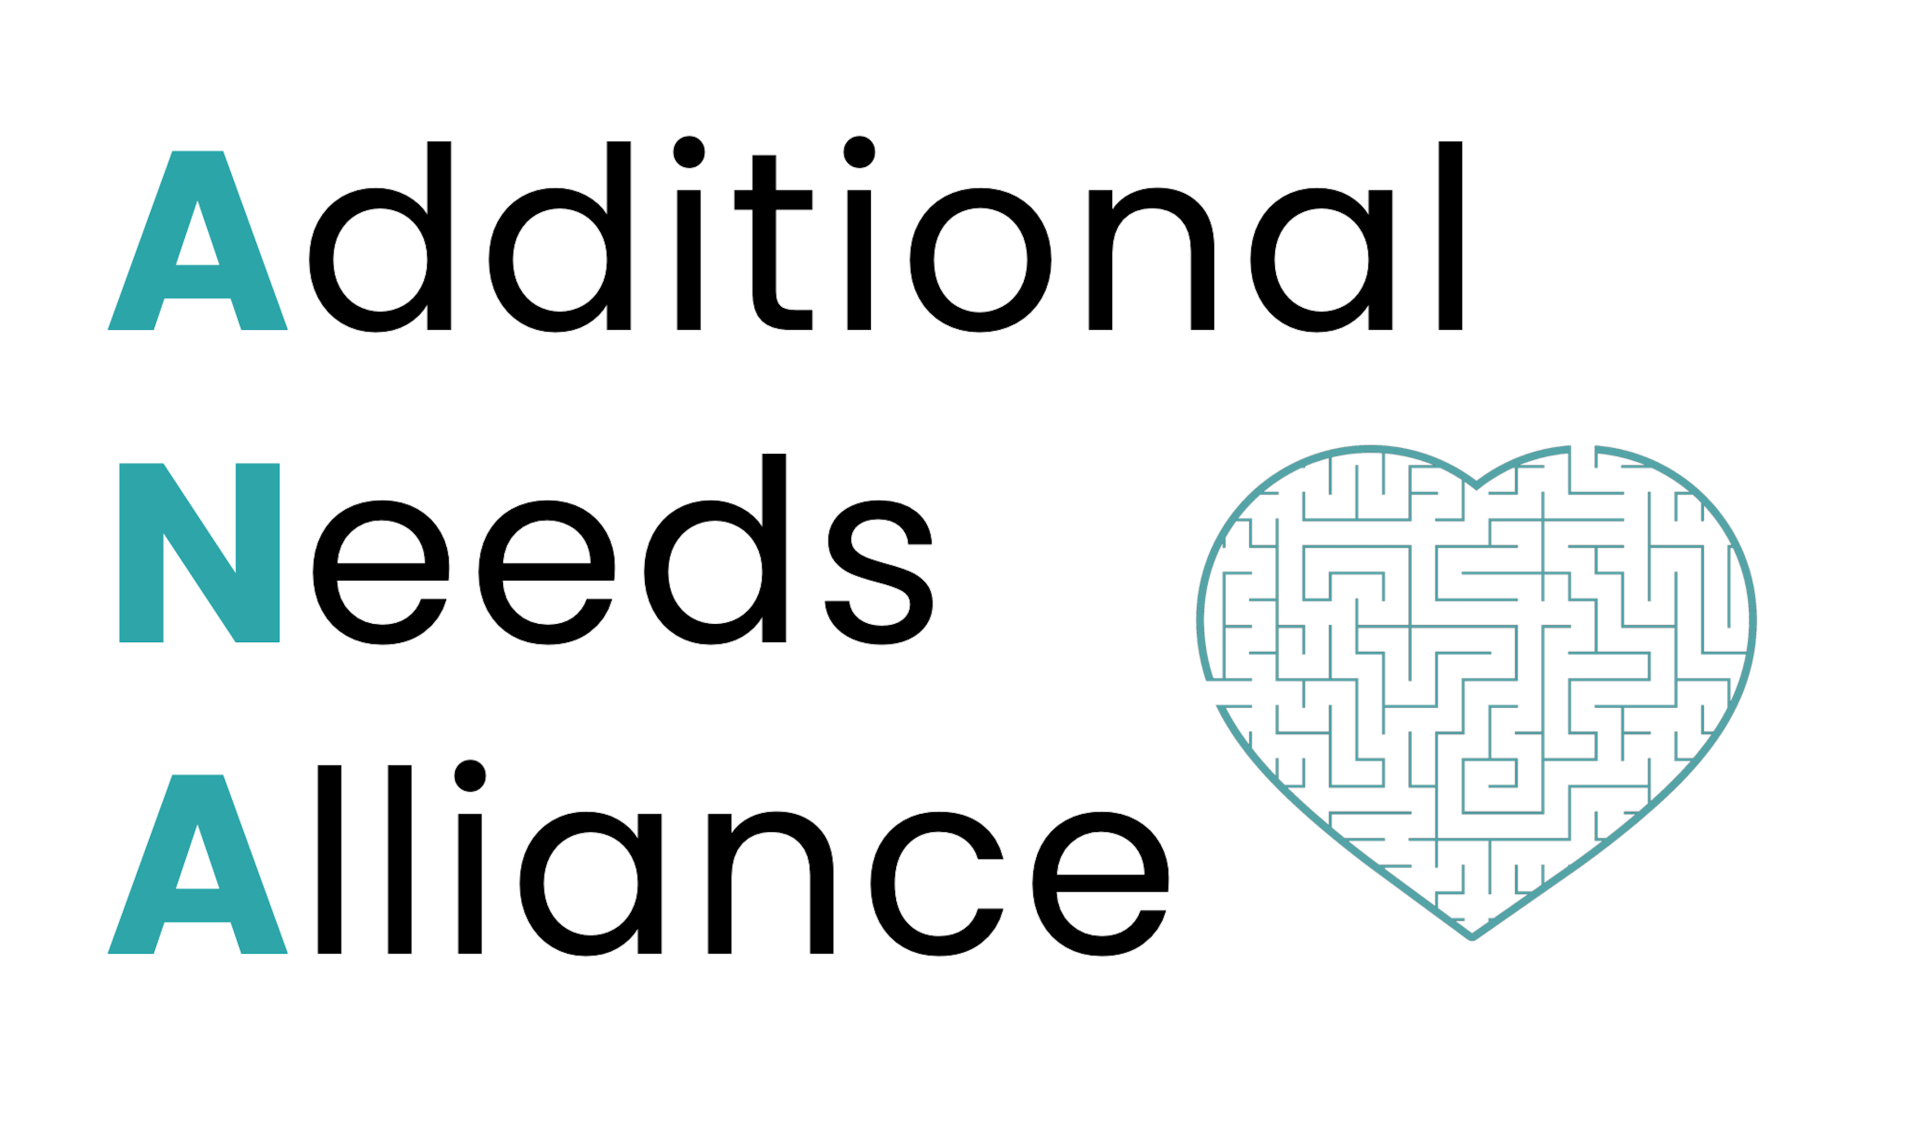 The Additional Needs Alliance logo